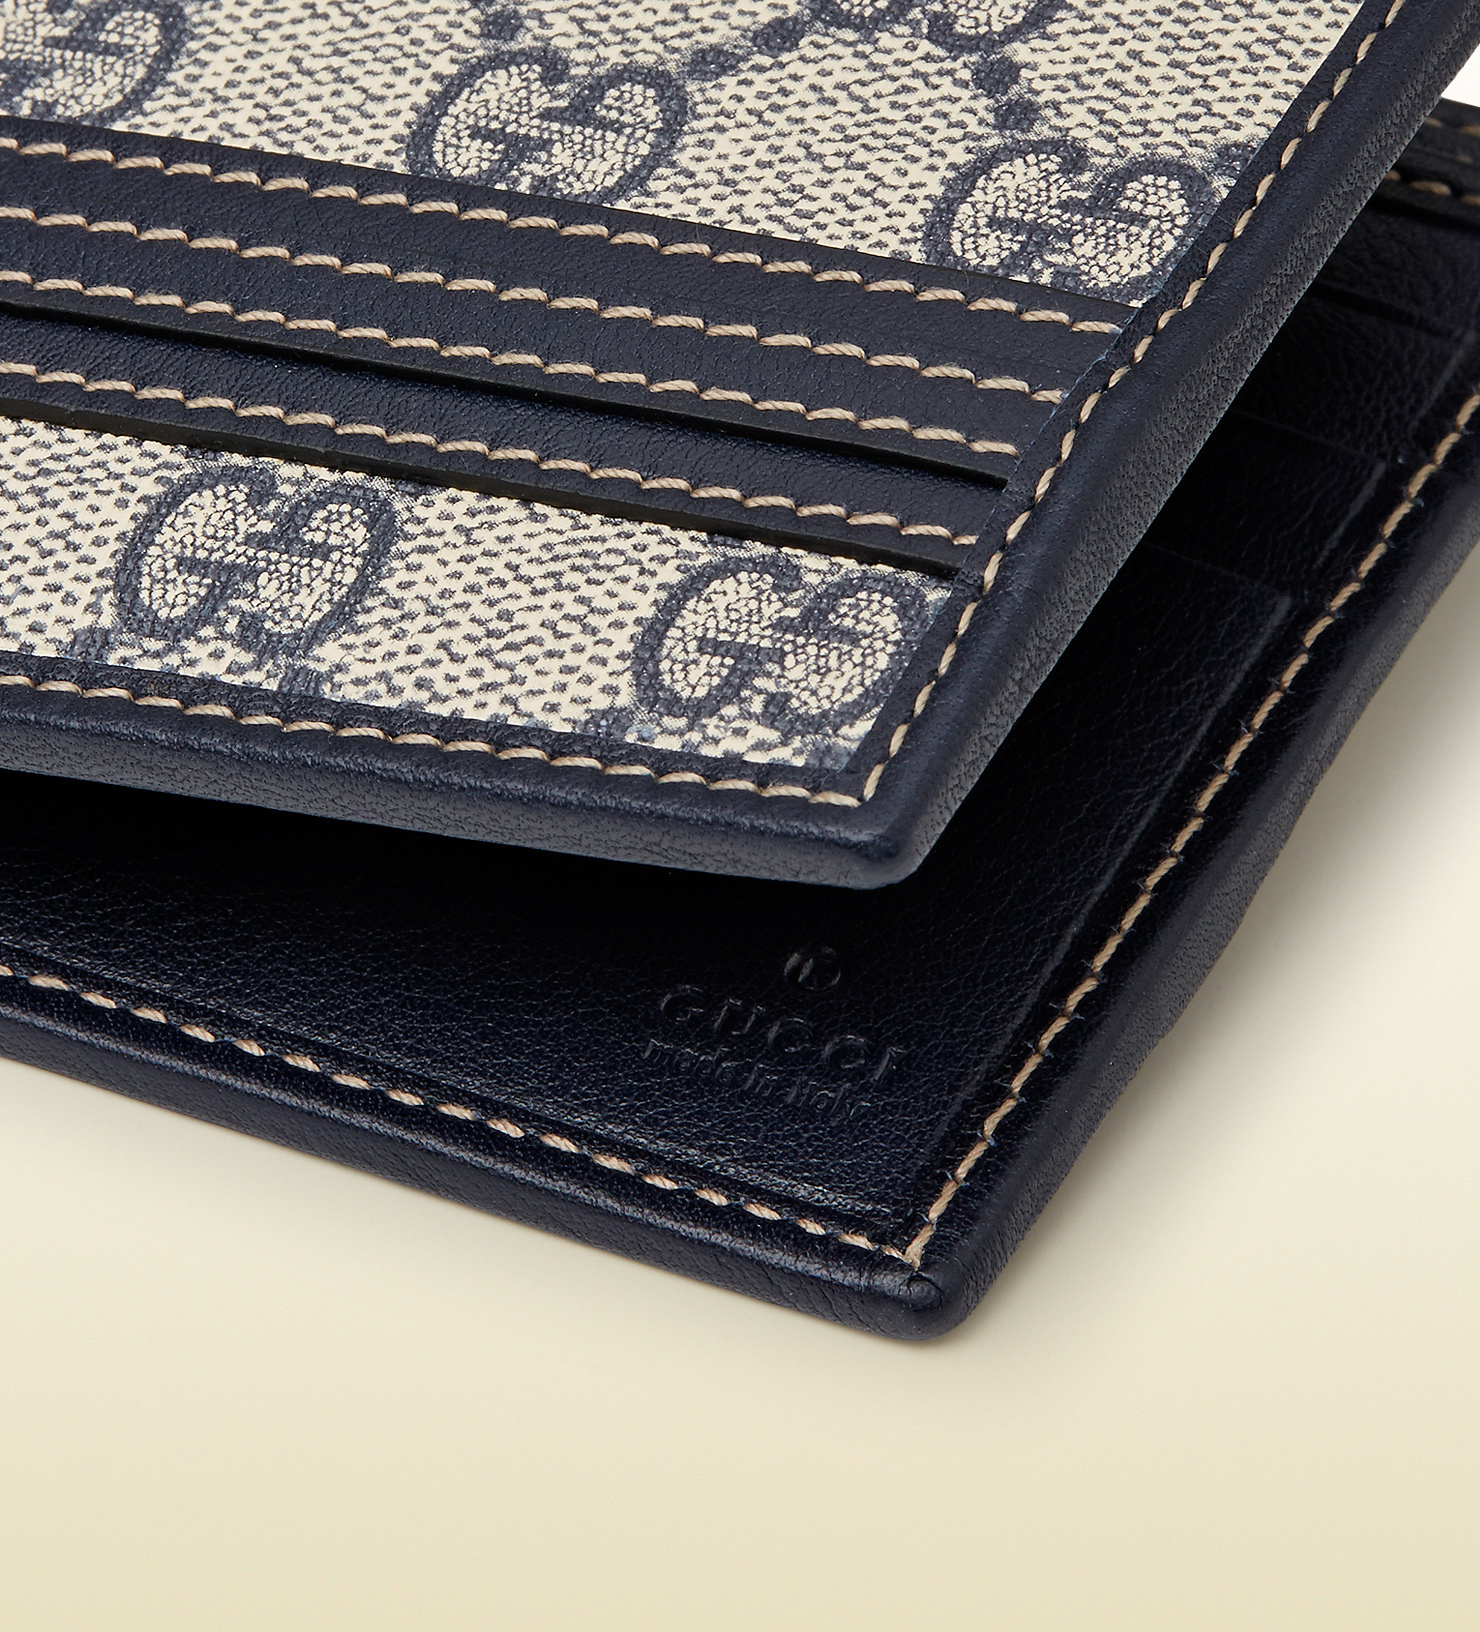 Gucci Gg Supreme Canvas Bi-fold Wallet in Beige (Natural) for Men - Lyst